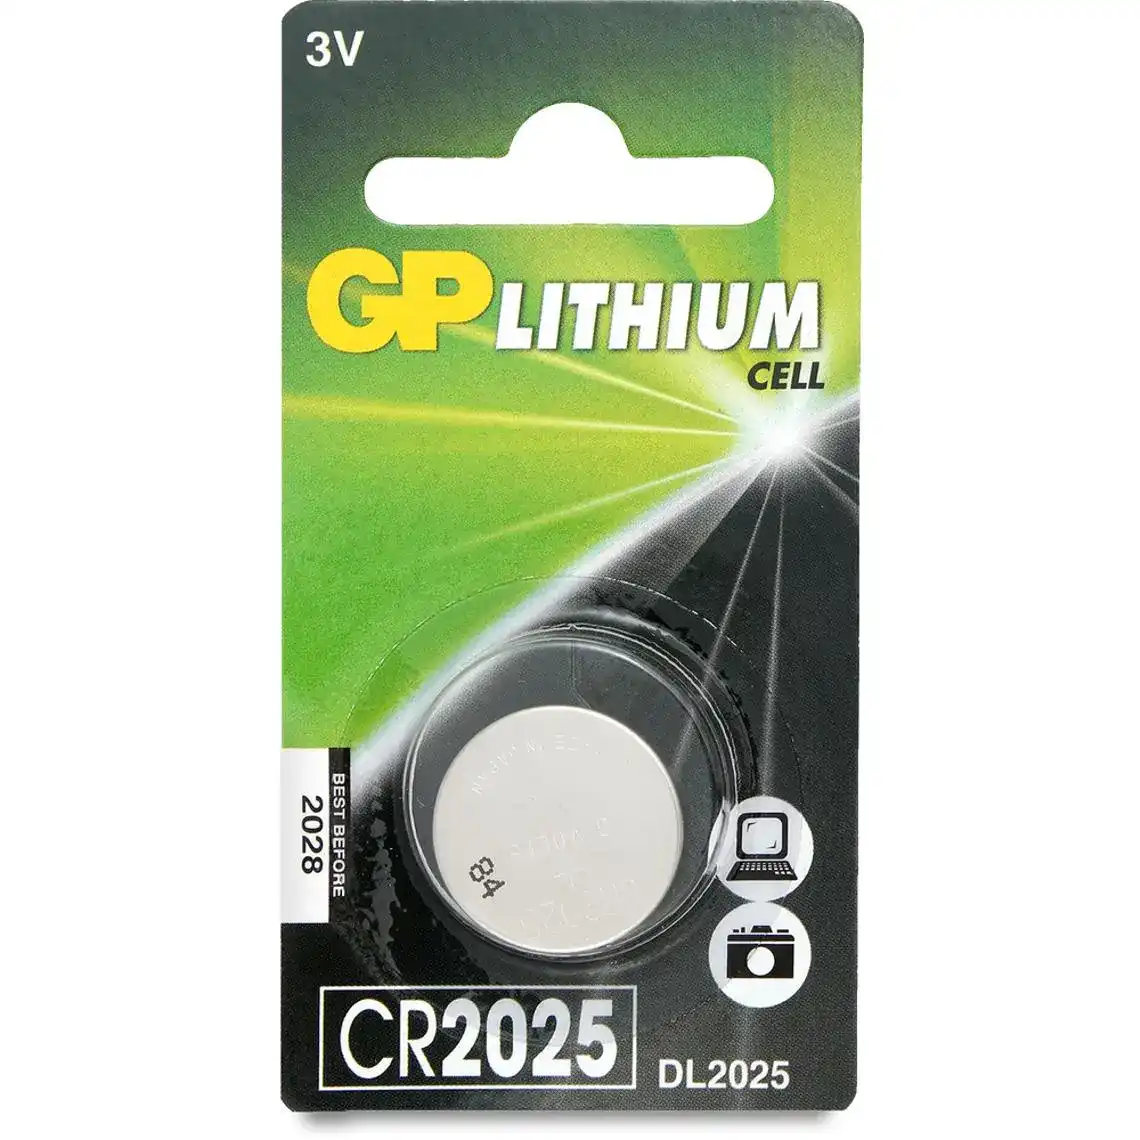 Батарейка GP Lithium Button Cell 3.0V CR2025-7U1